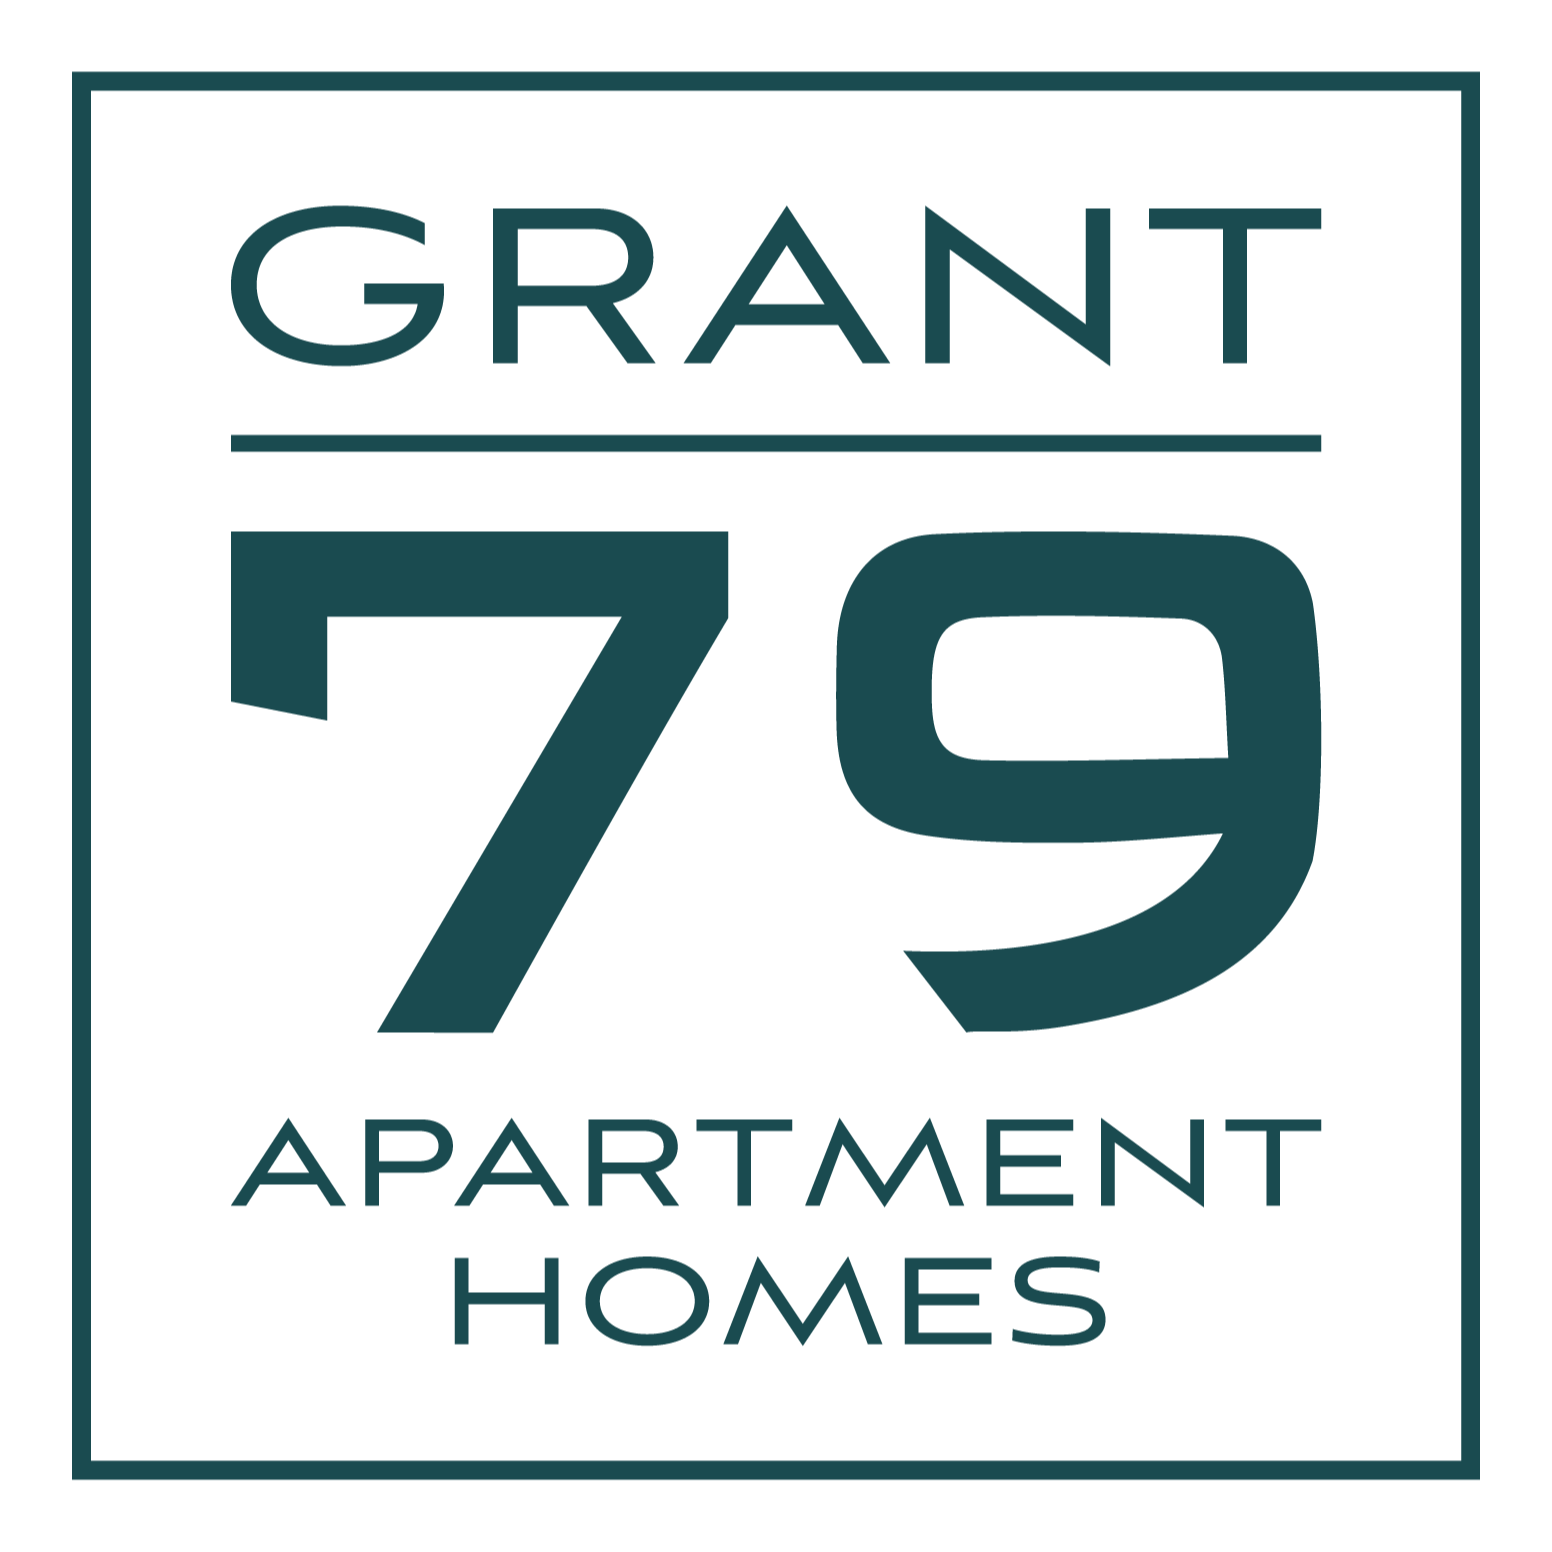 Grant 79 Apartment Homes